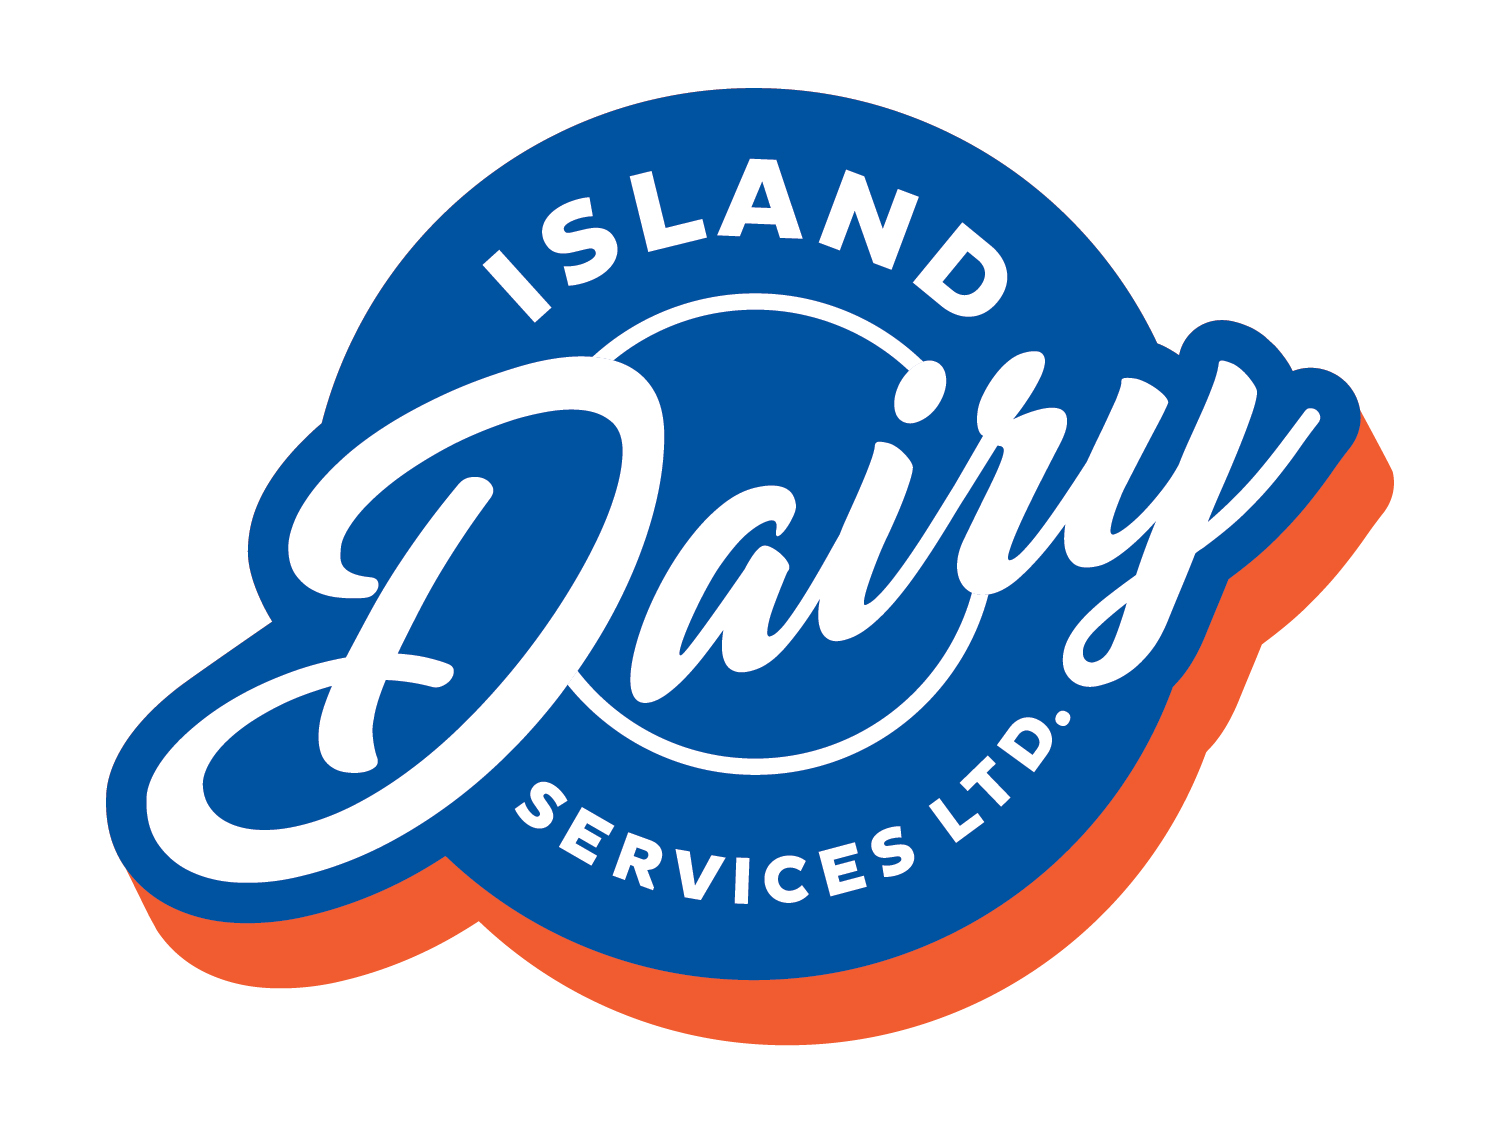 Island Dairy Services Ltd.